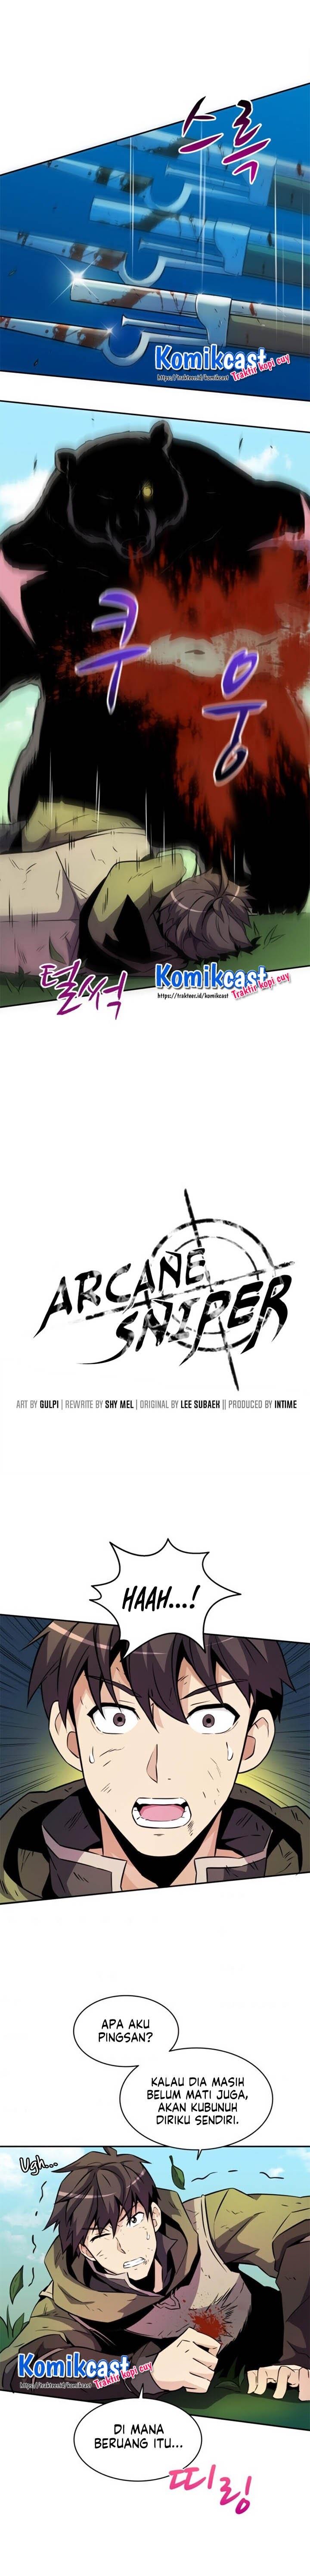 Arcane Sniper Chapter 18